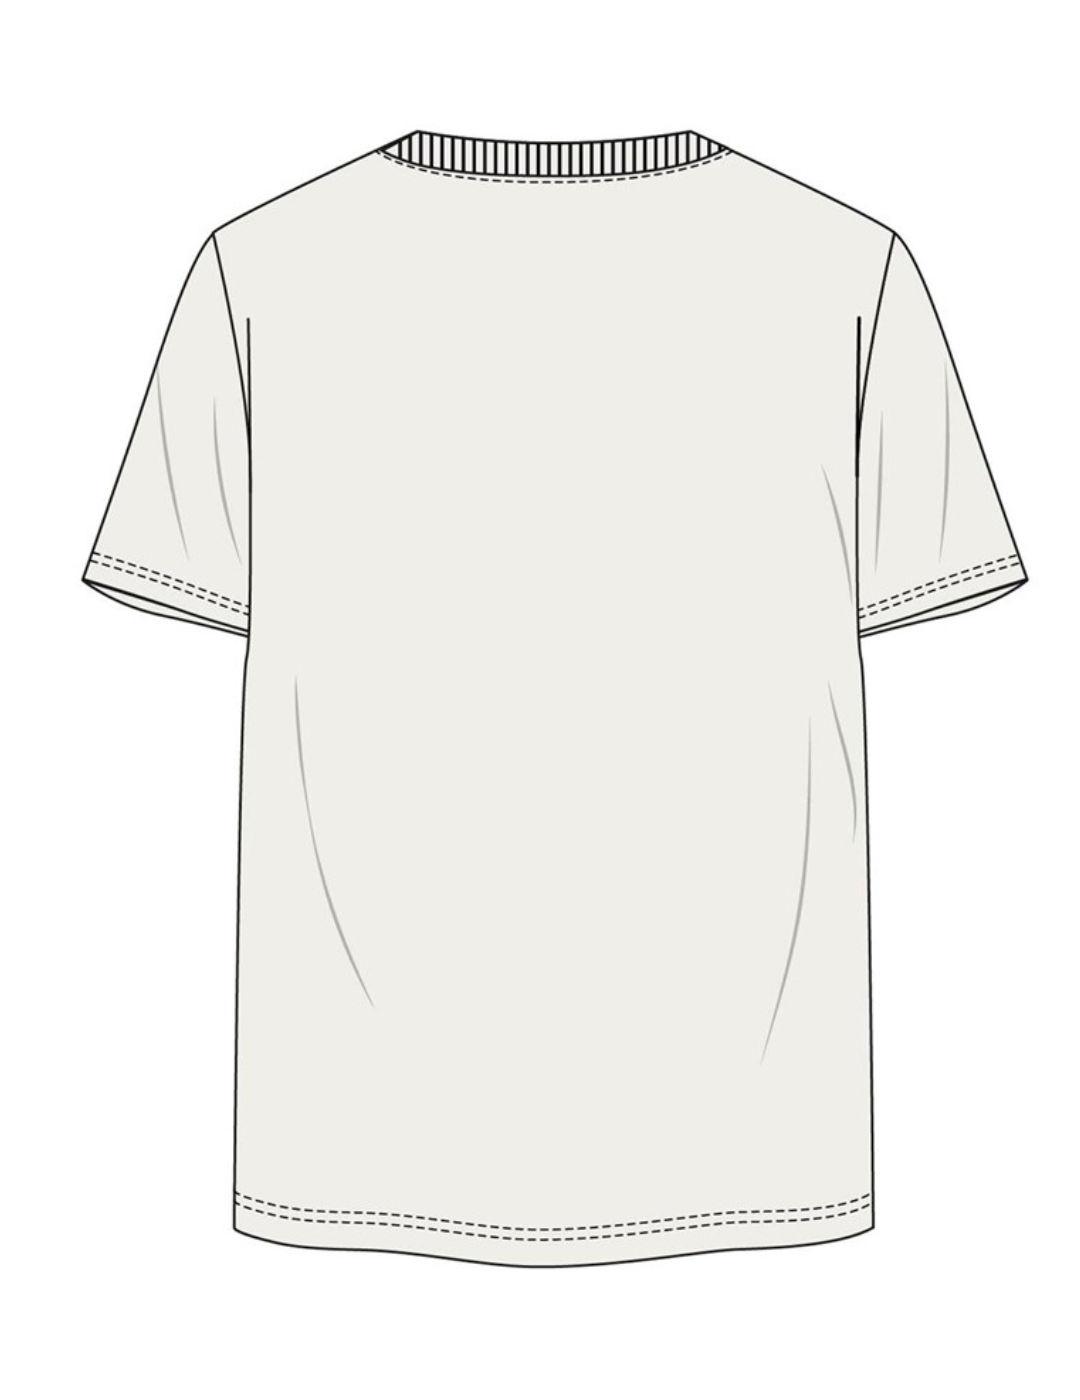 Camiseta Jack&Jones Dragonball blanca manga corta de hombre